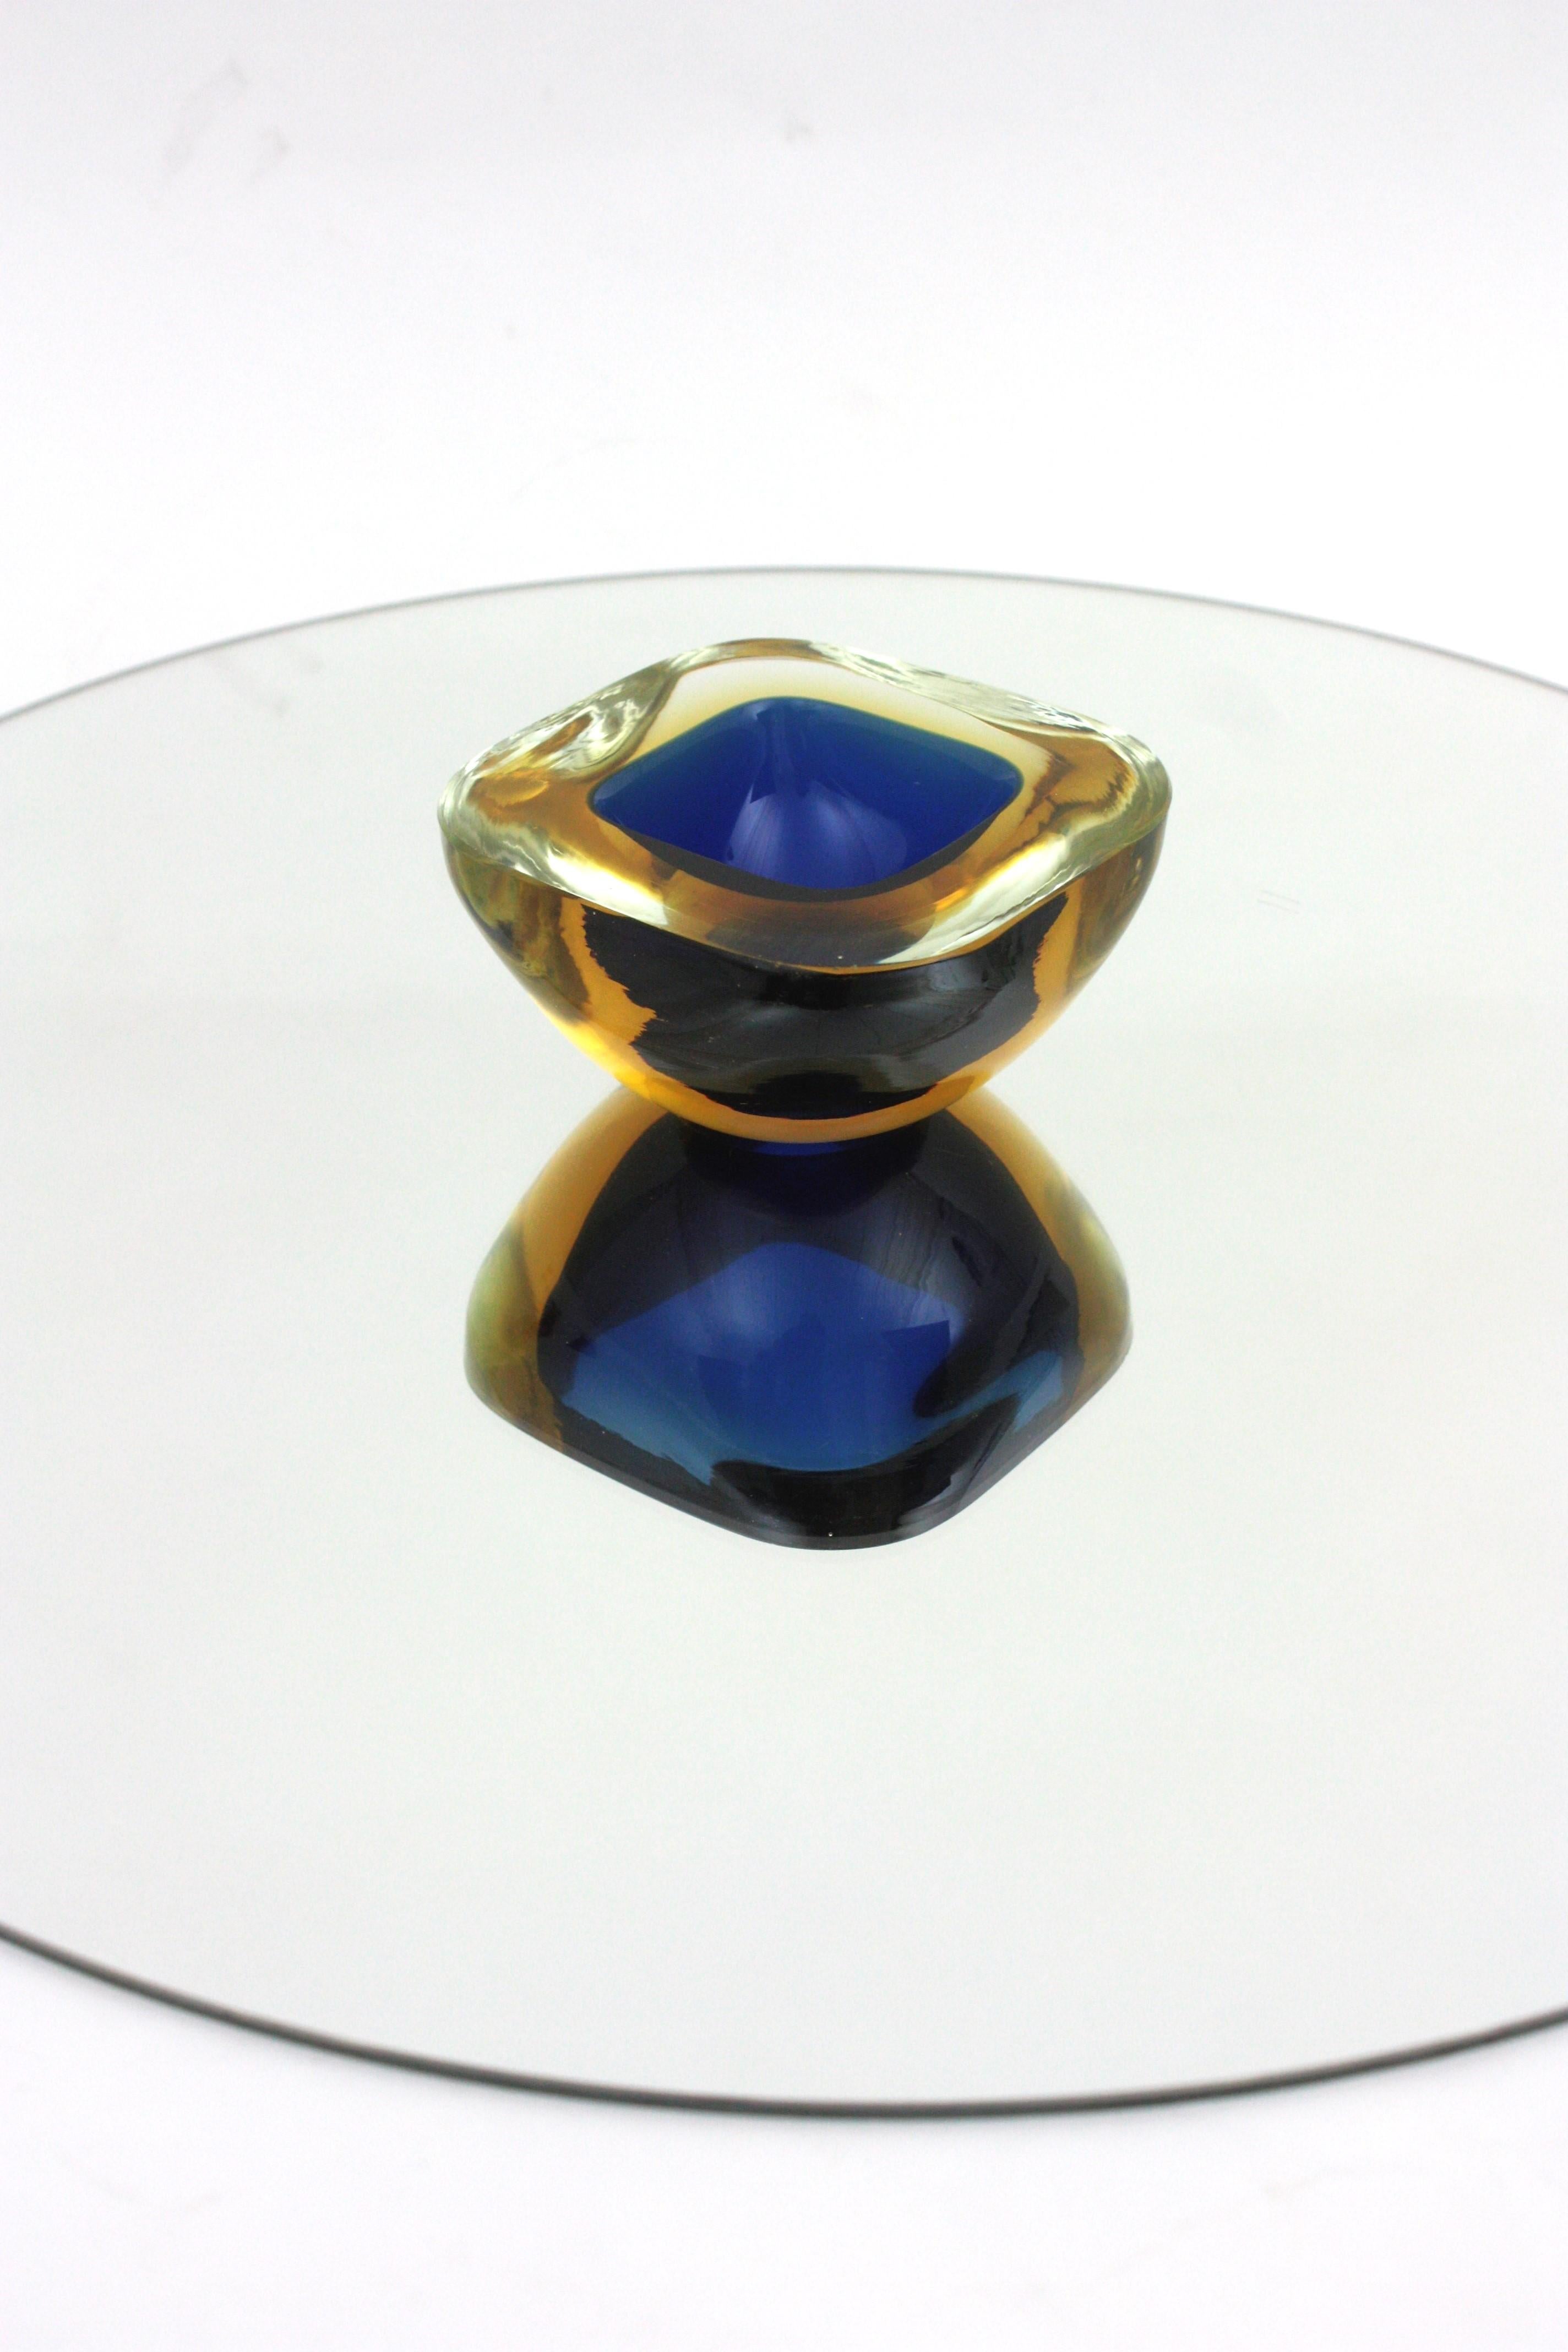 Flavio Poli Seguso Murano Sommerso Blue Yellow Art Glass Geode Bowl In Good Condition For Sale In Barcelona, ES